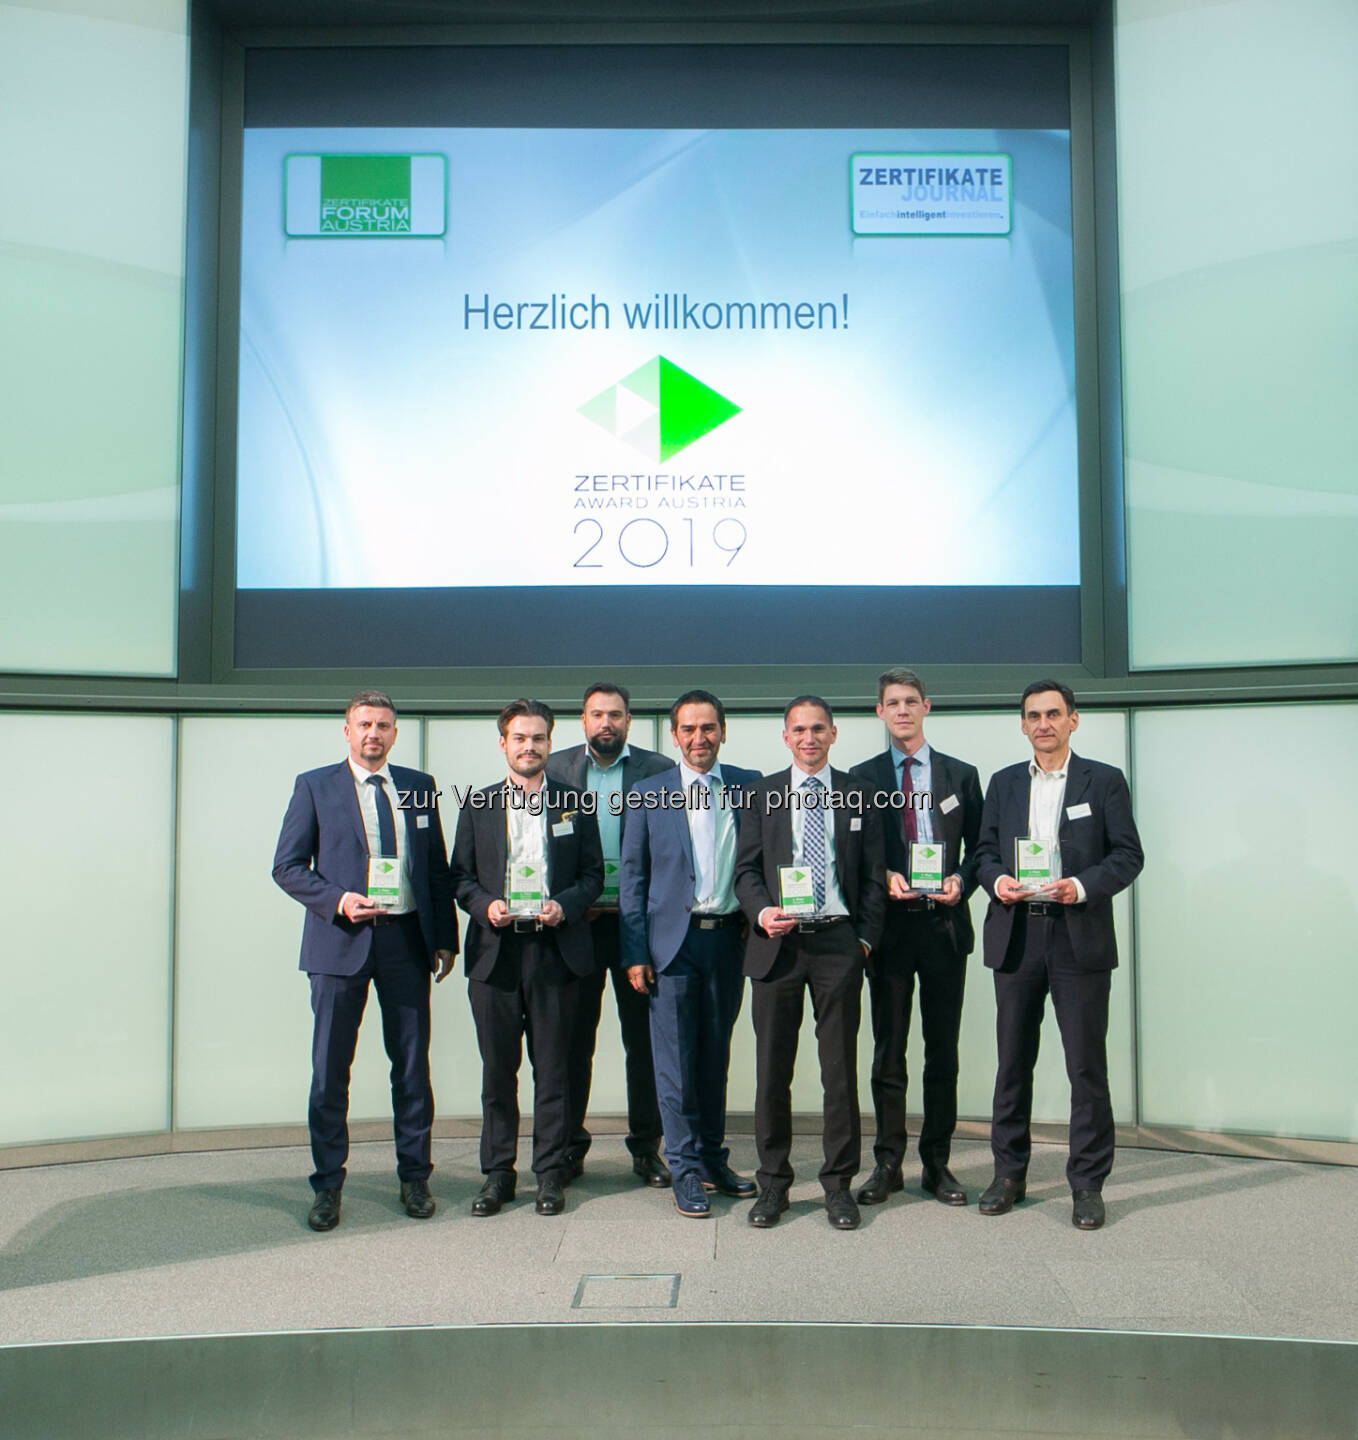 Zertifikate Award Austria 2019 - Team Erste 